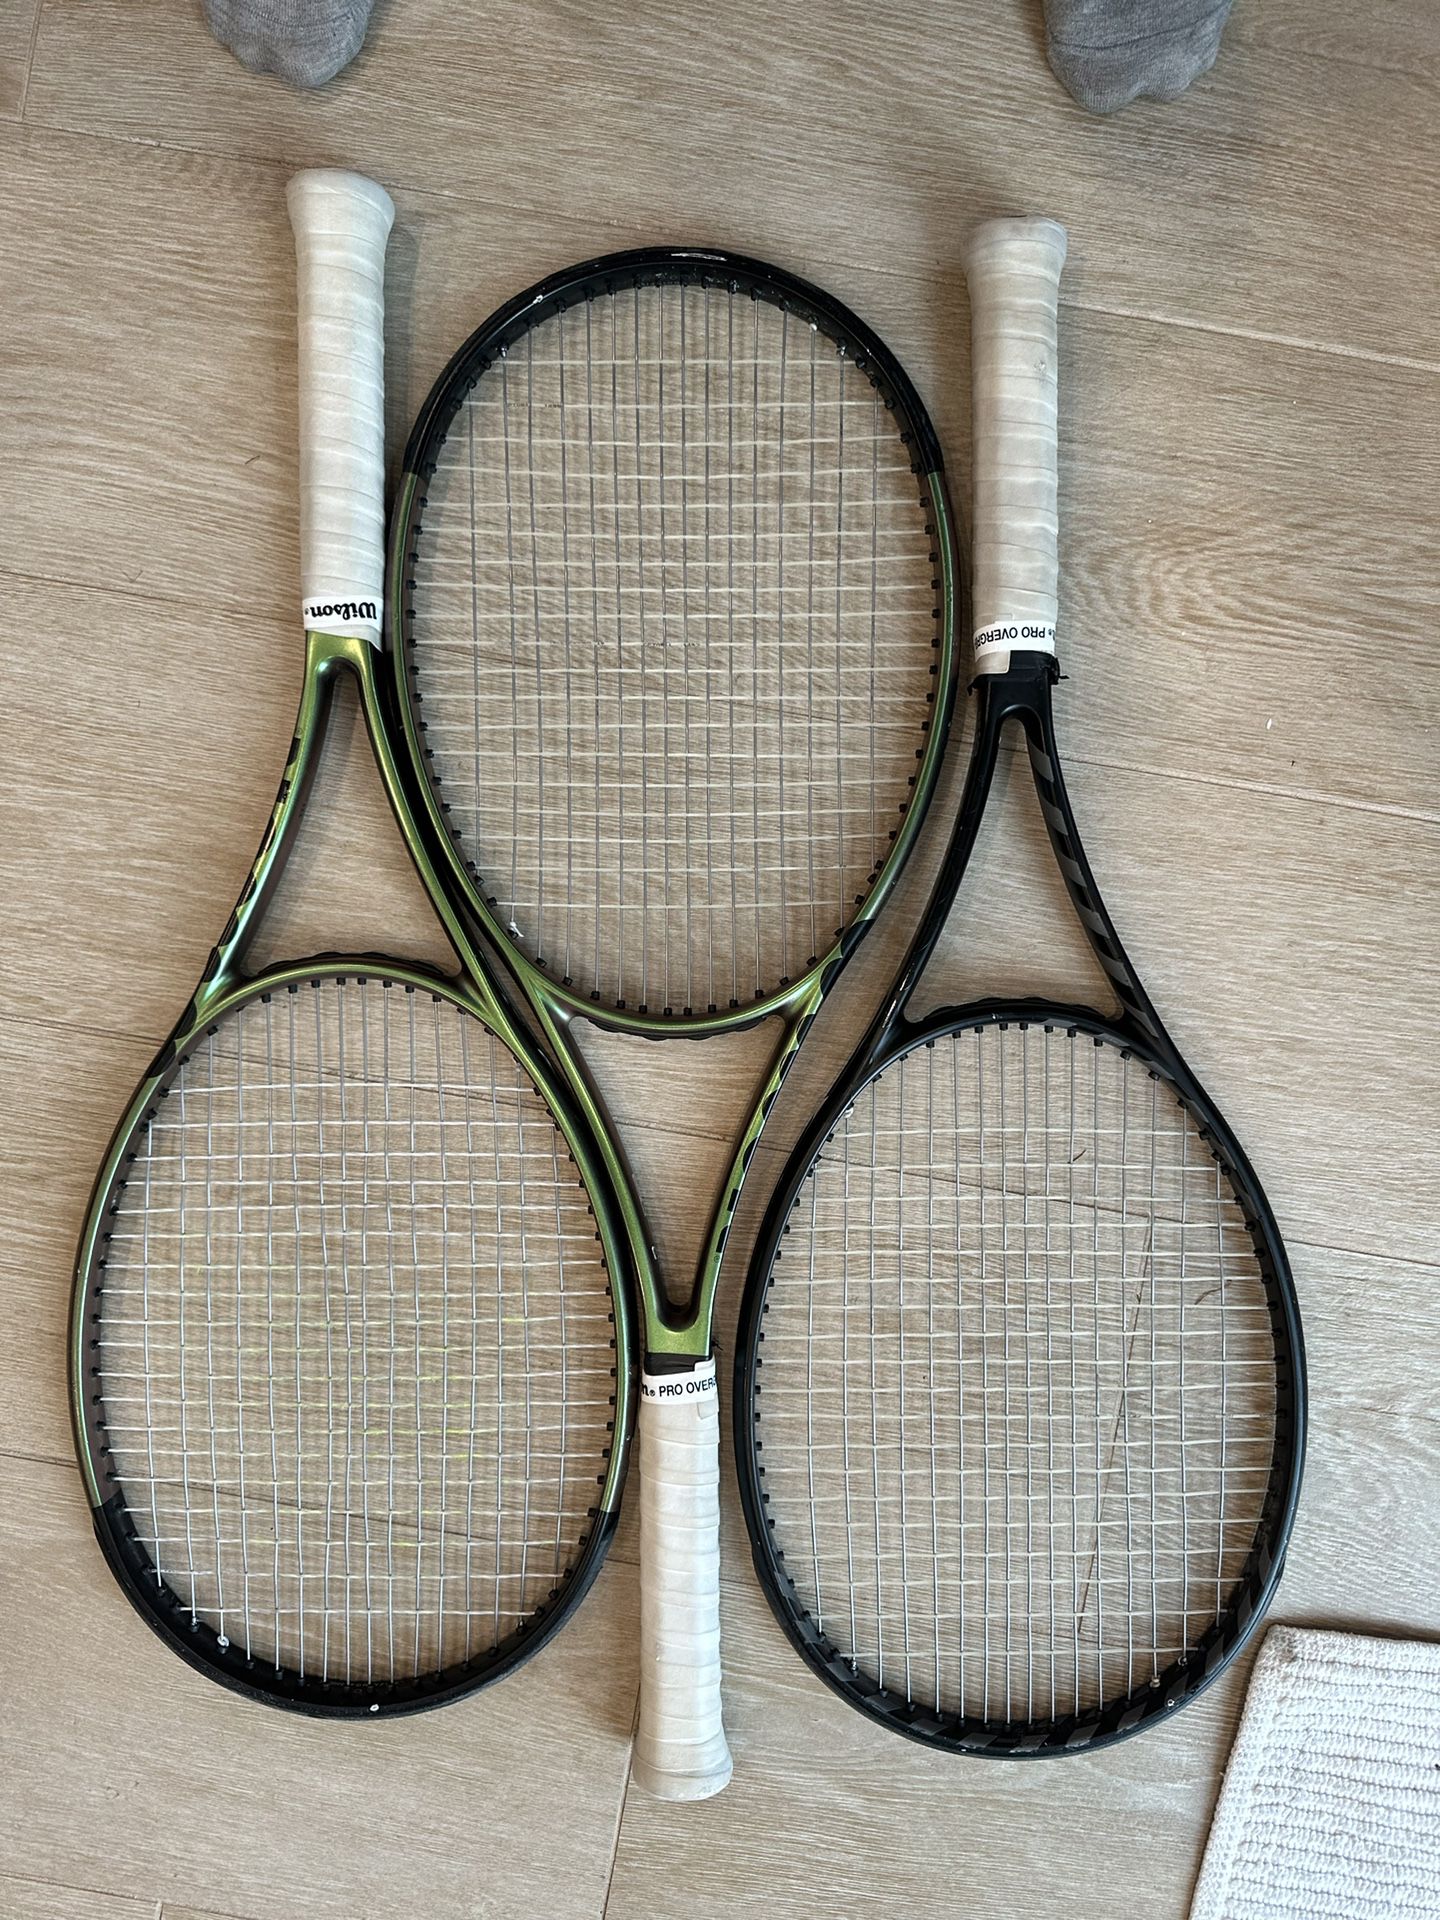 Tennis Racket - Wilson Blade V8 (2 Available)